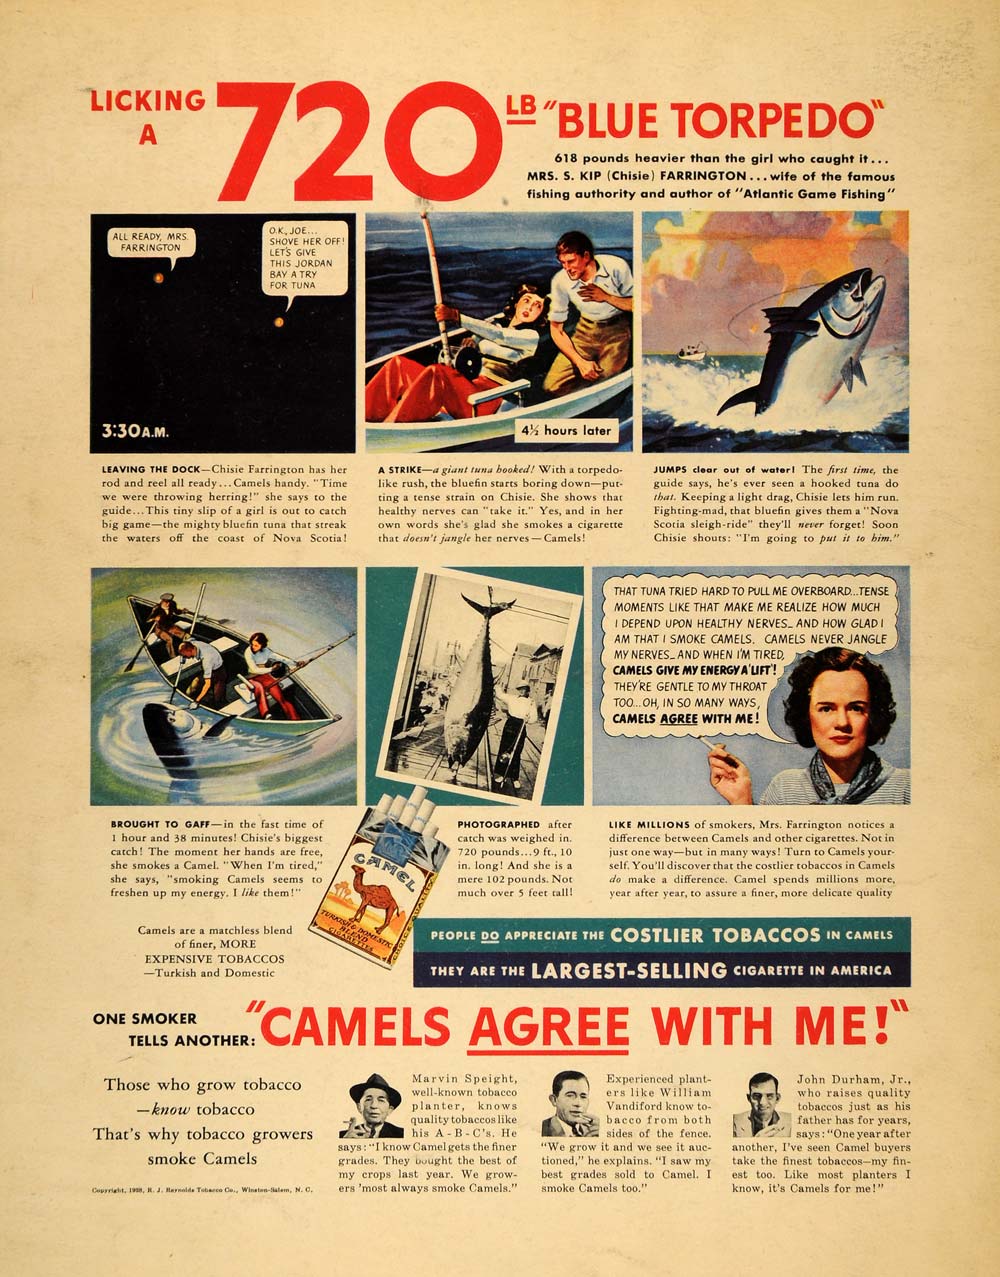 1938 Ad Camel Cigarettes Chisie Farrington Fishing - ORIGINAL ADVERTISING F2A